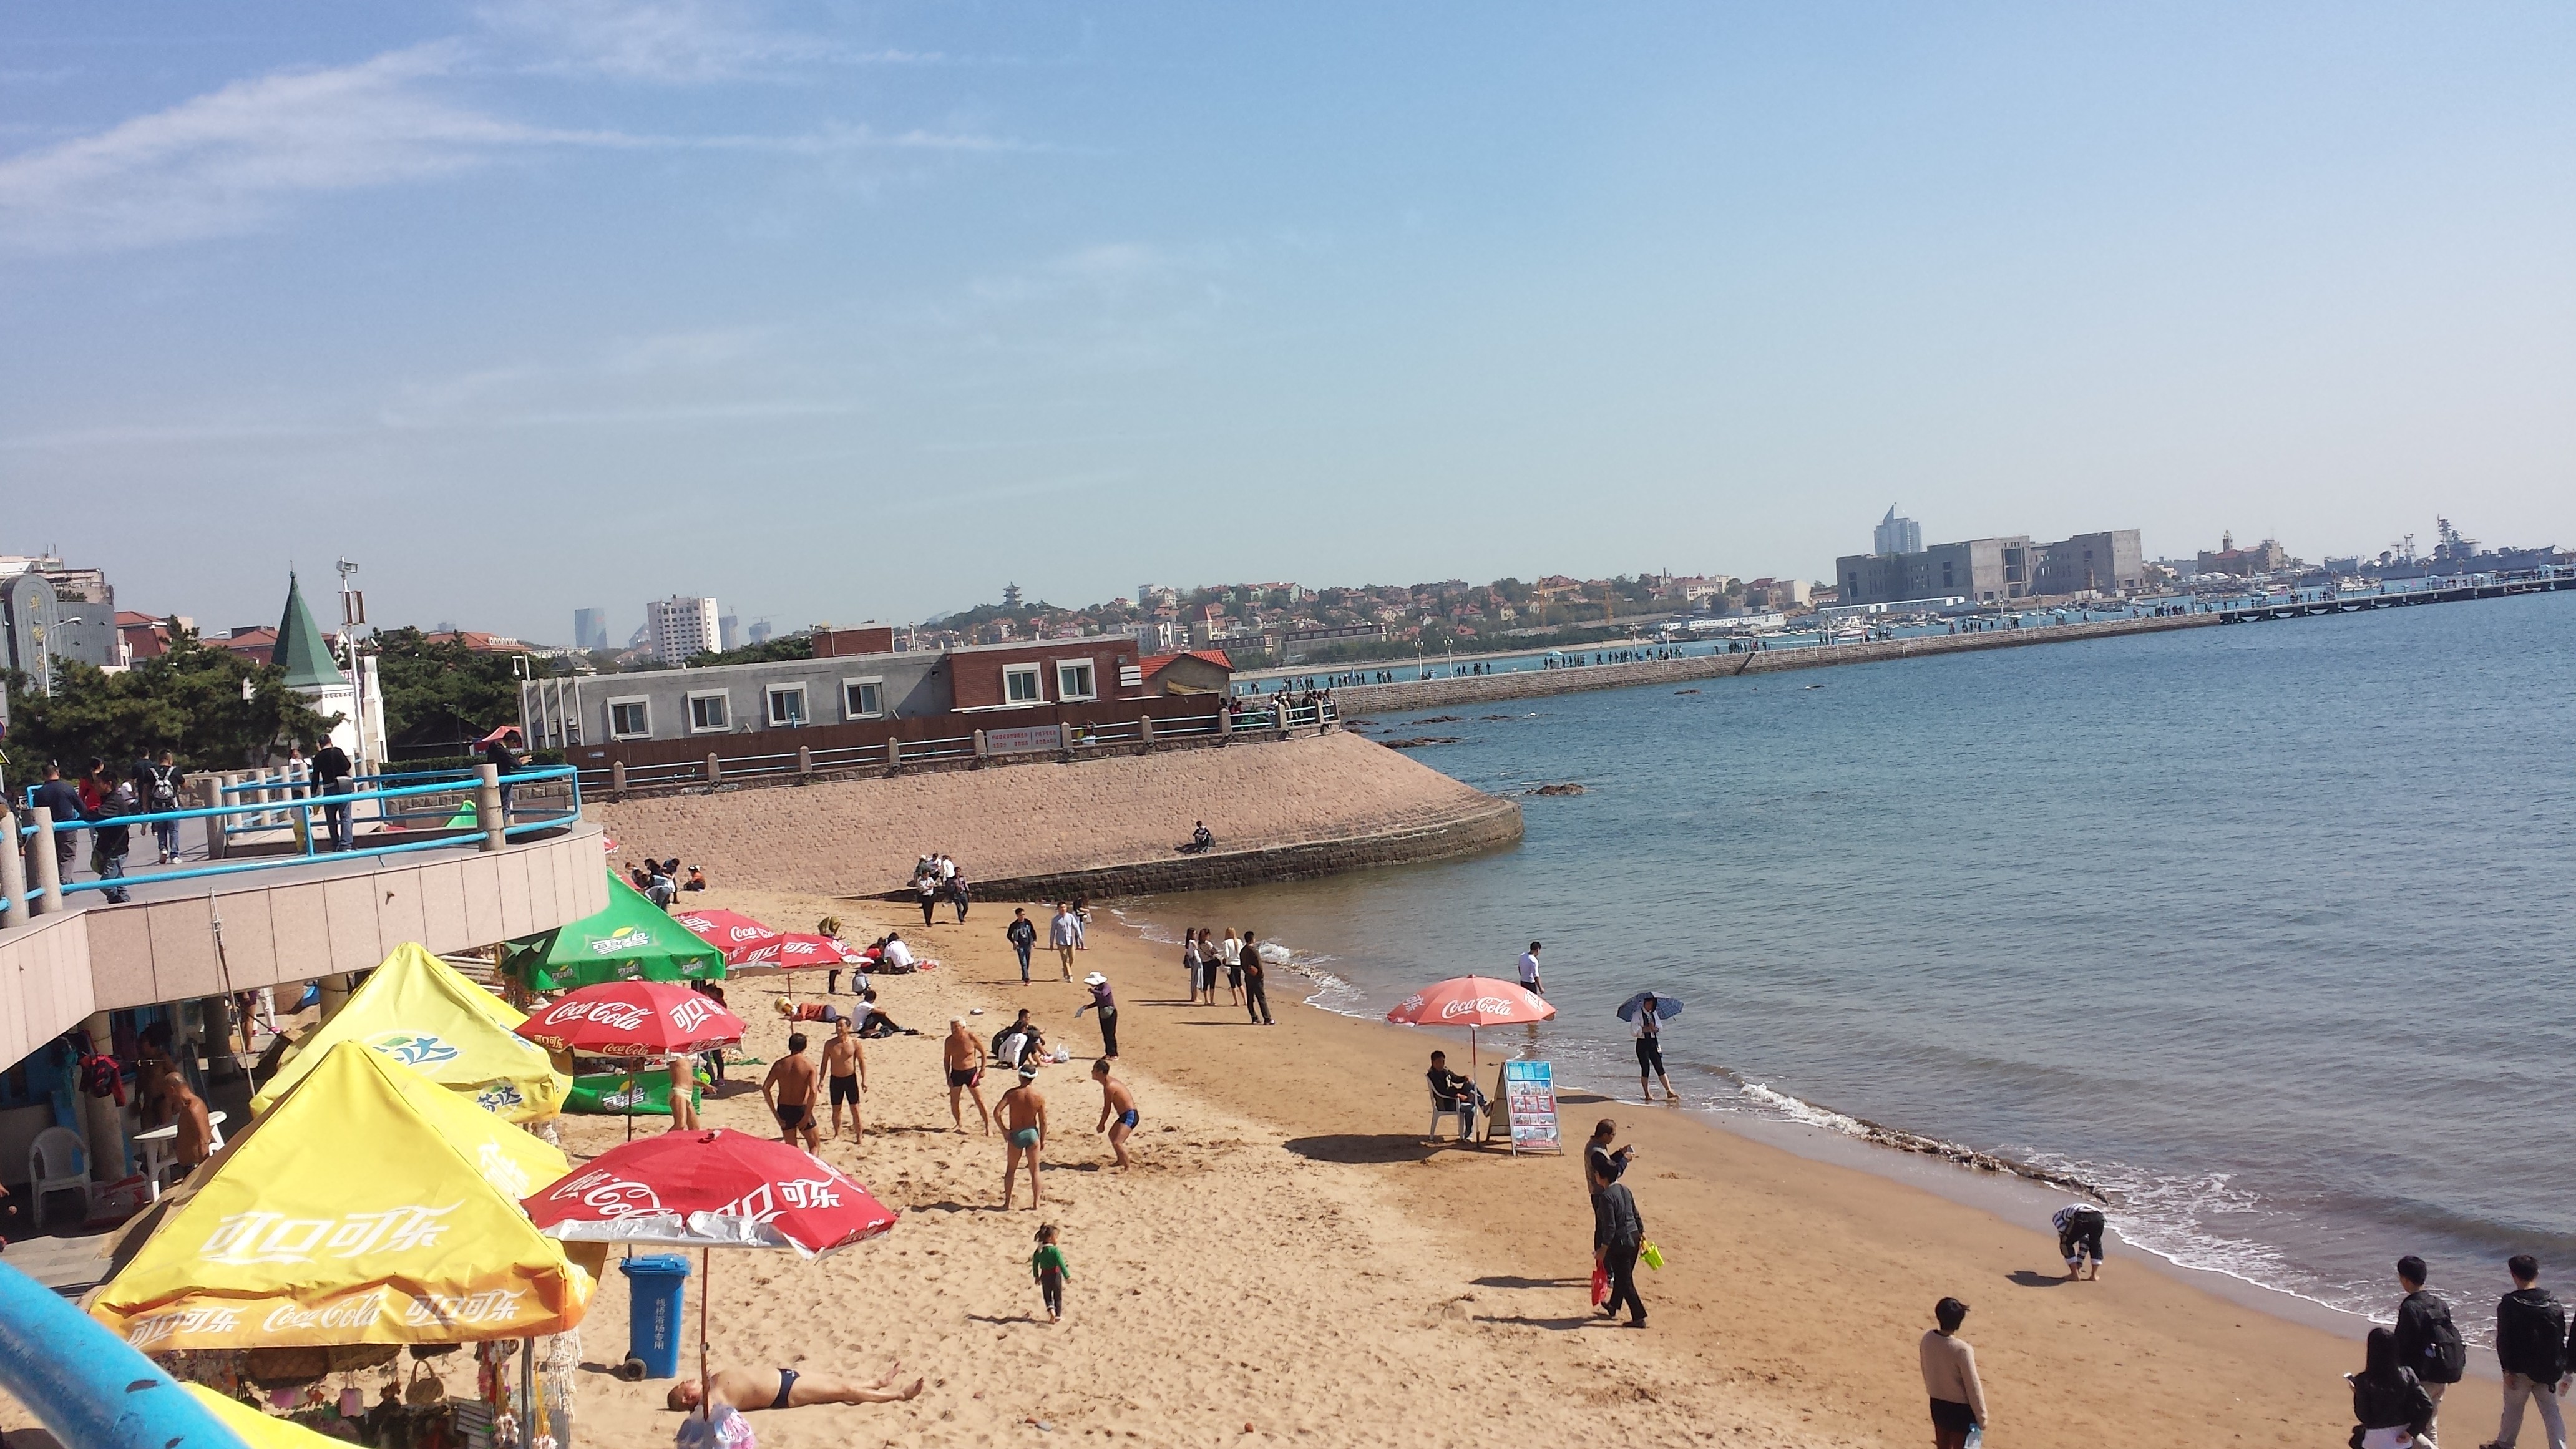 Sea port sailing city Qingdao and home to Tsingtao Beer - SELIMS RAASTA